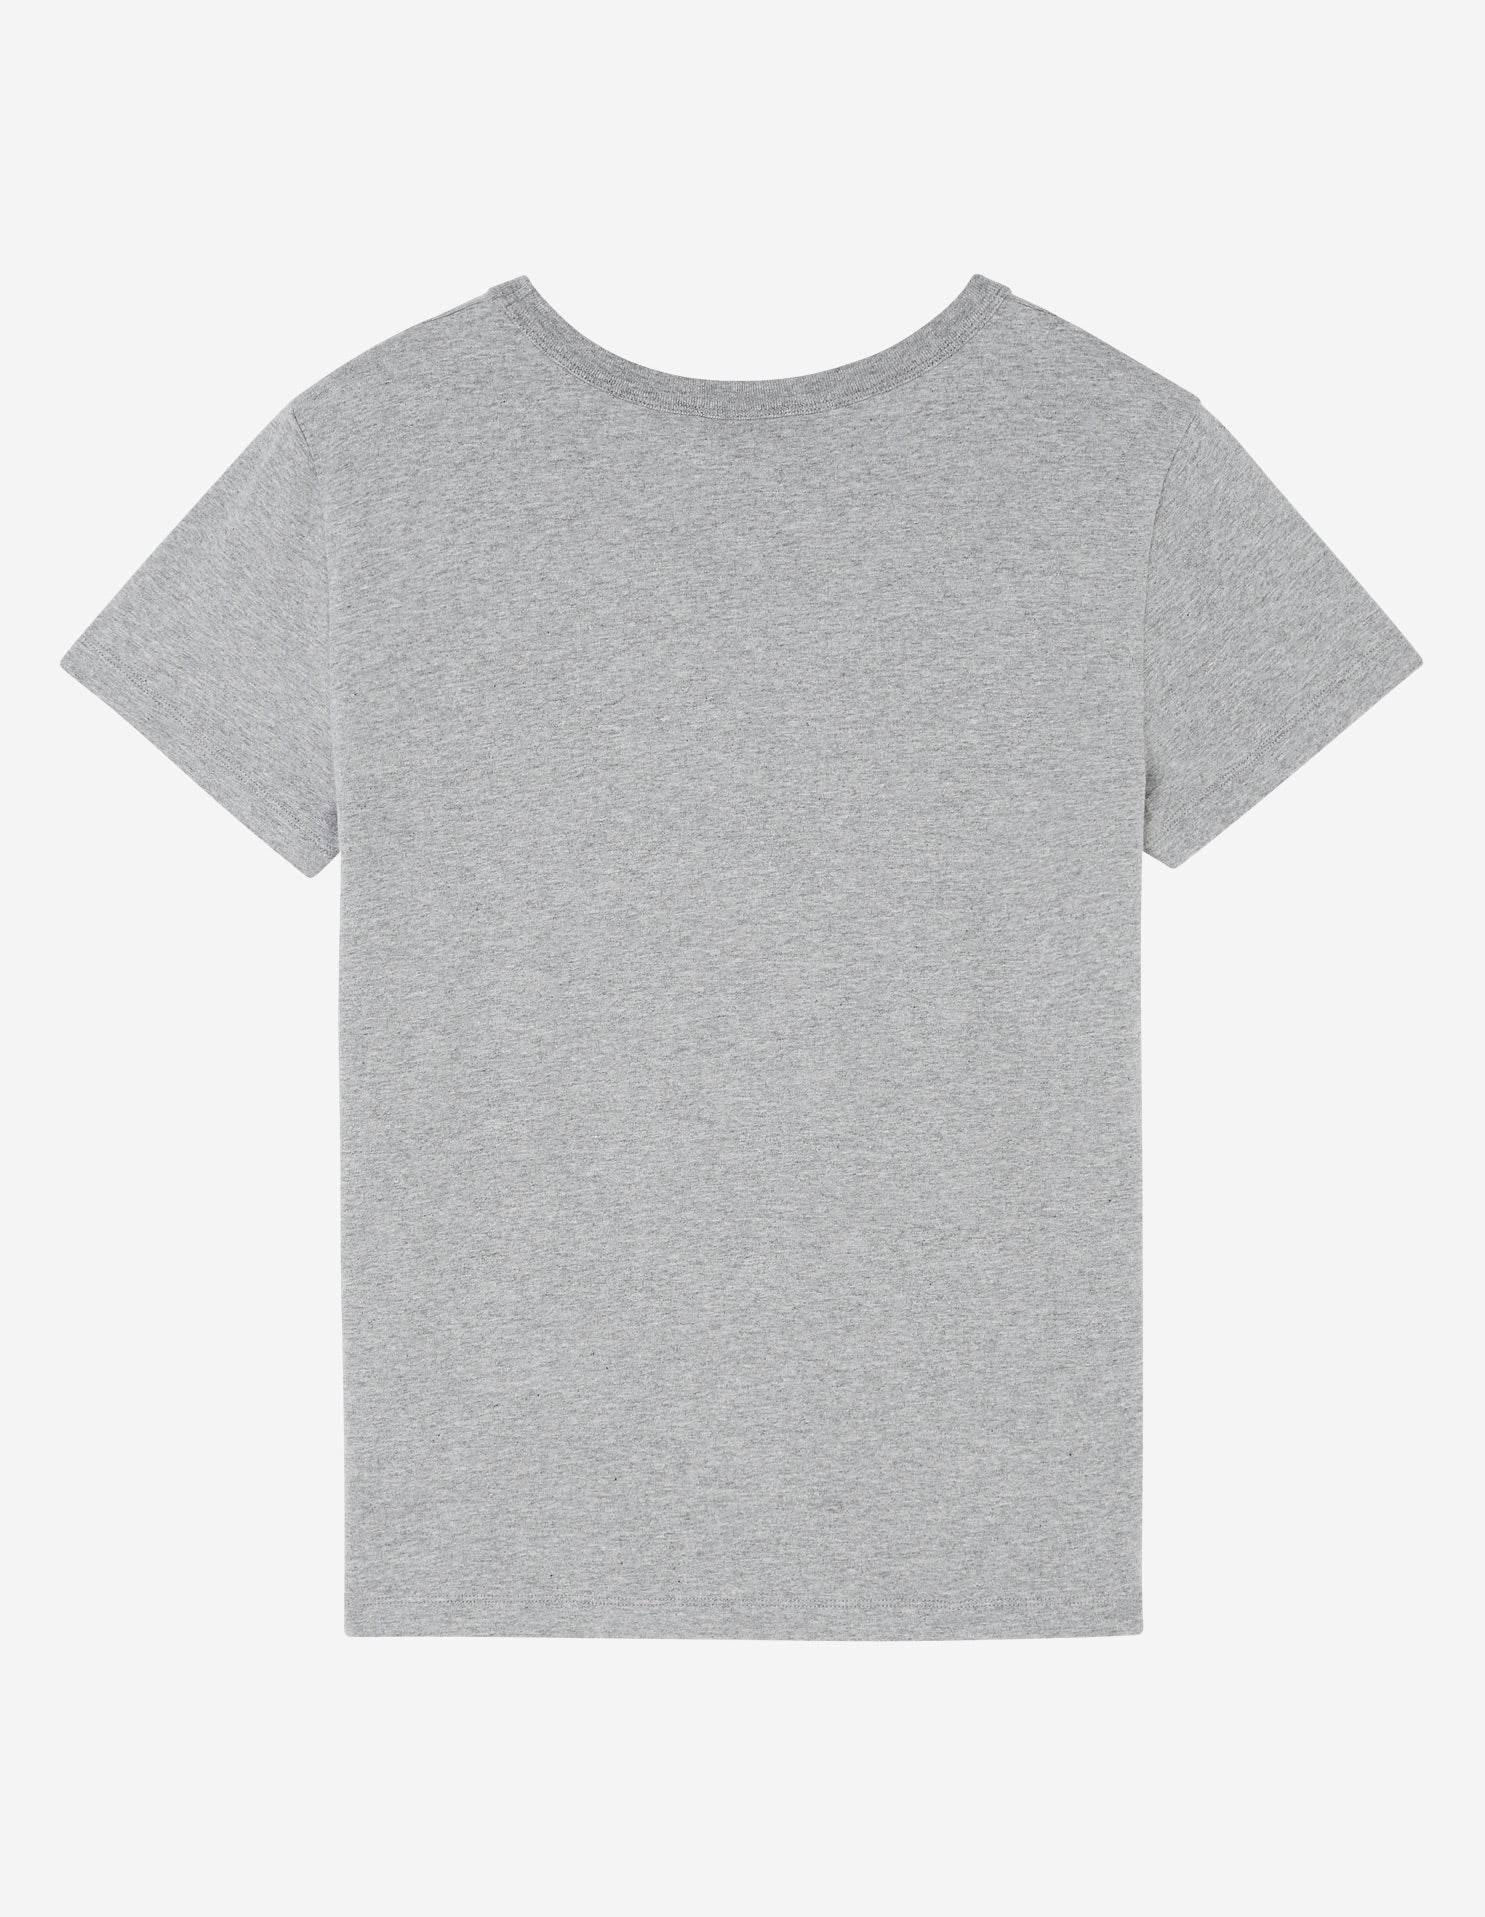 Tricolour fox pocket t-shirt, grey